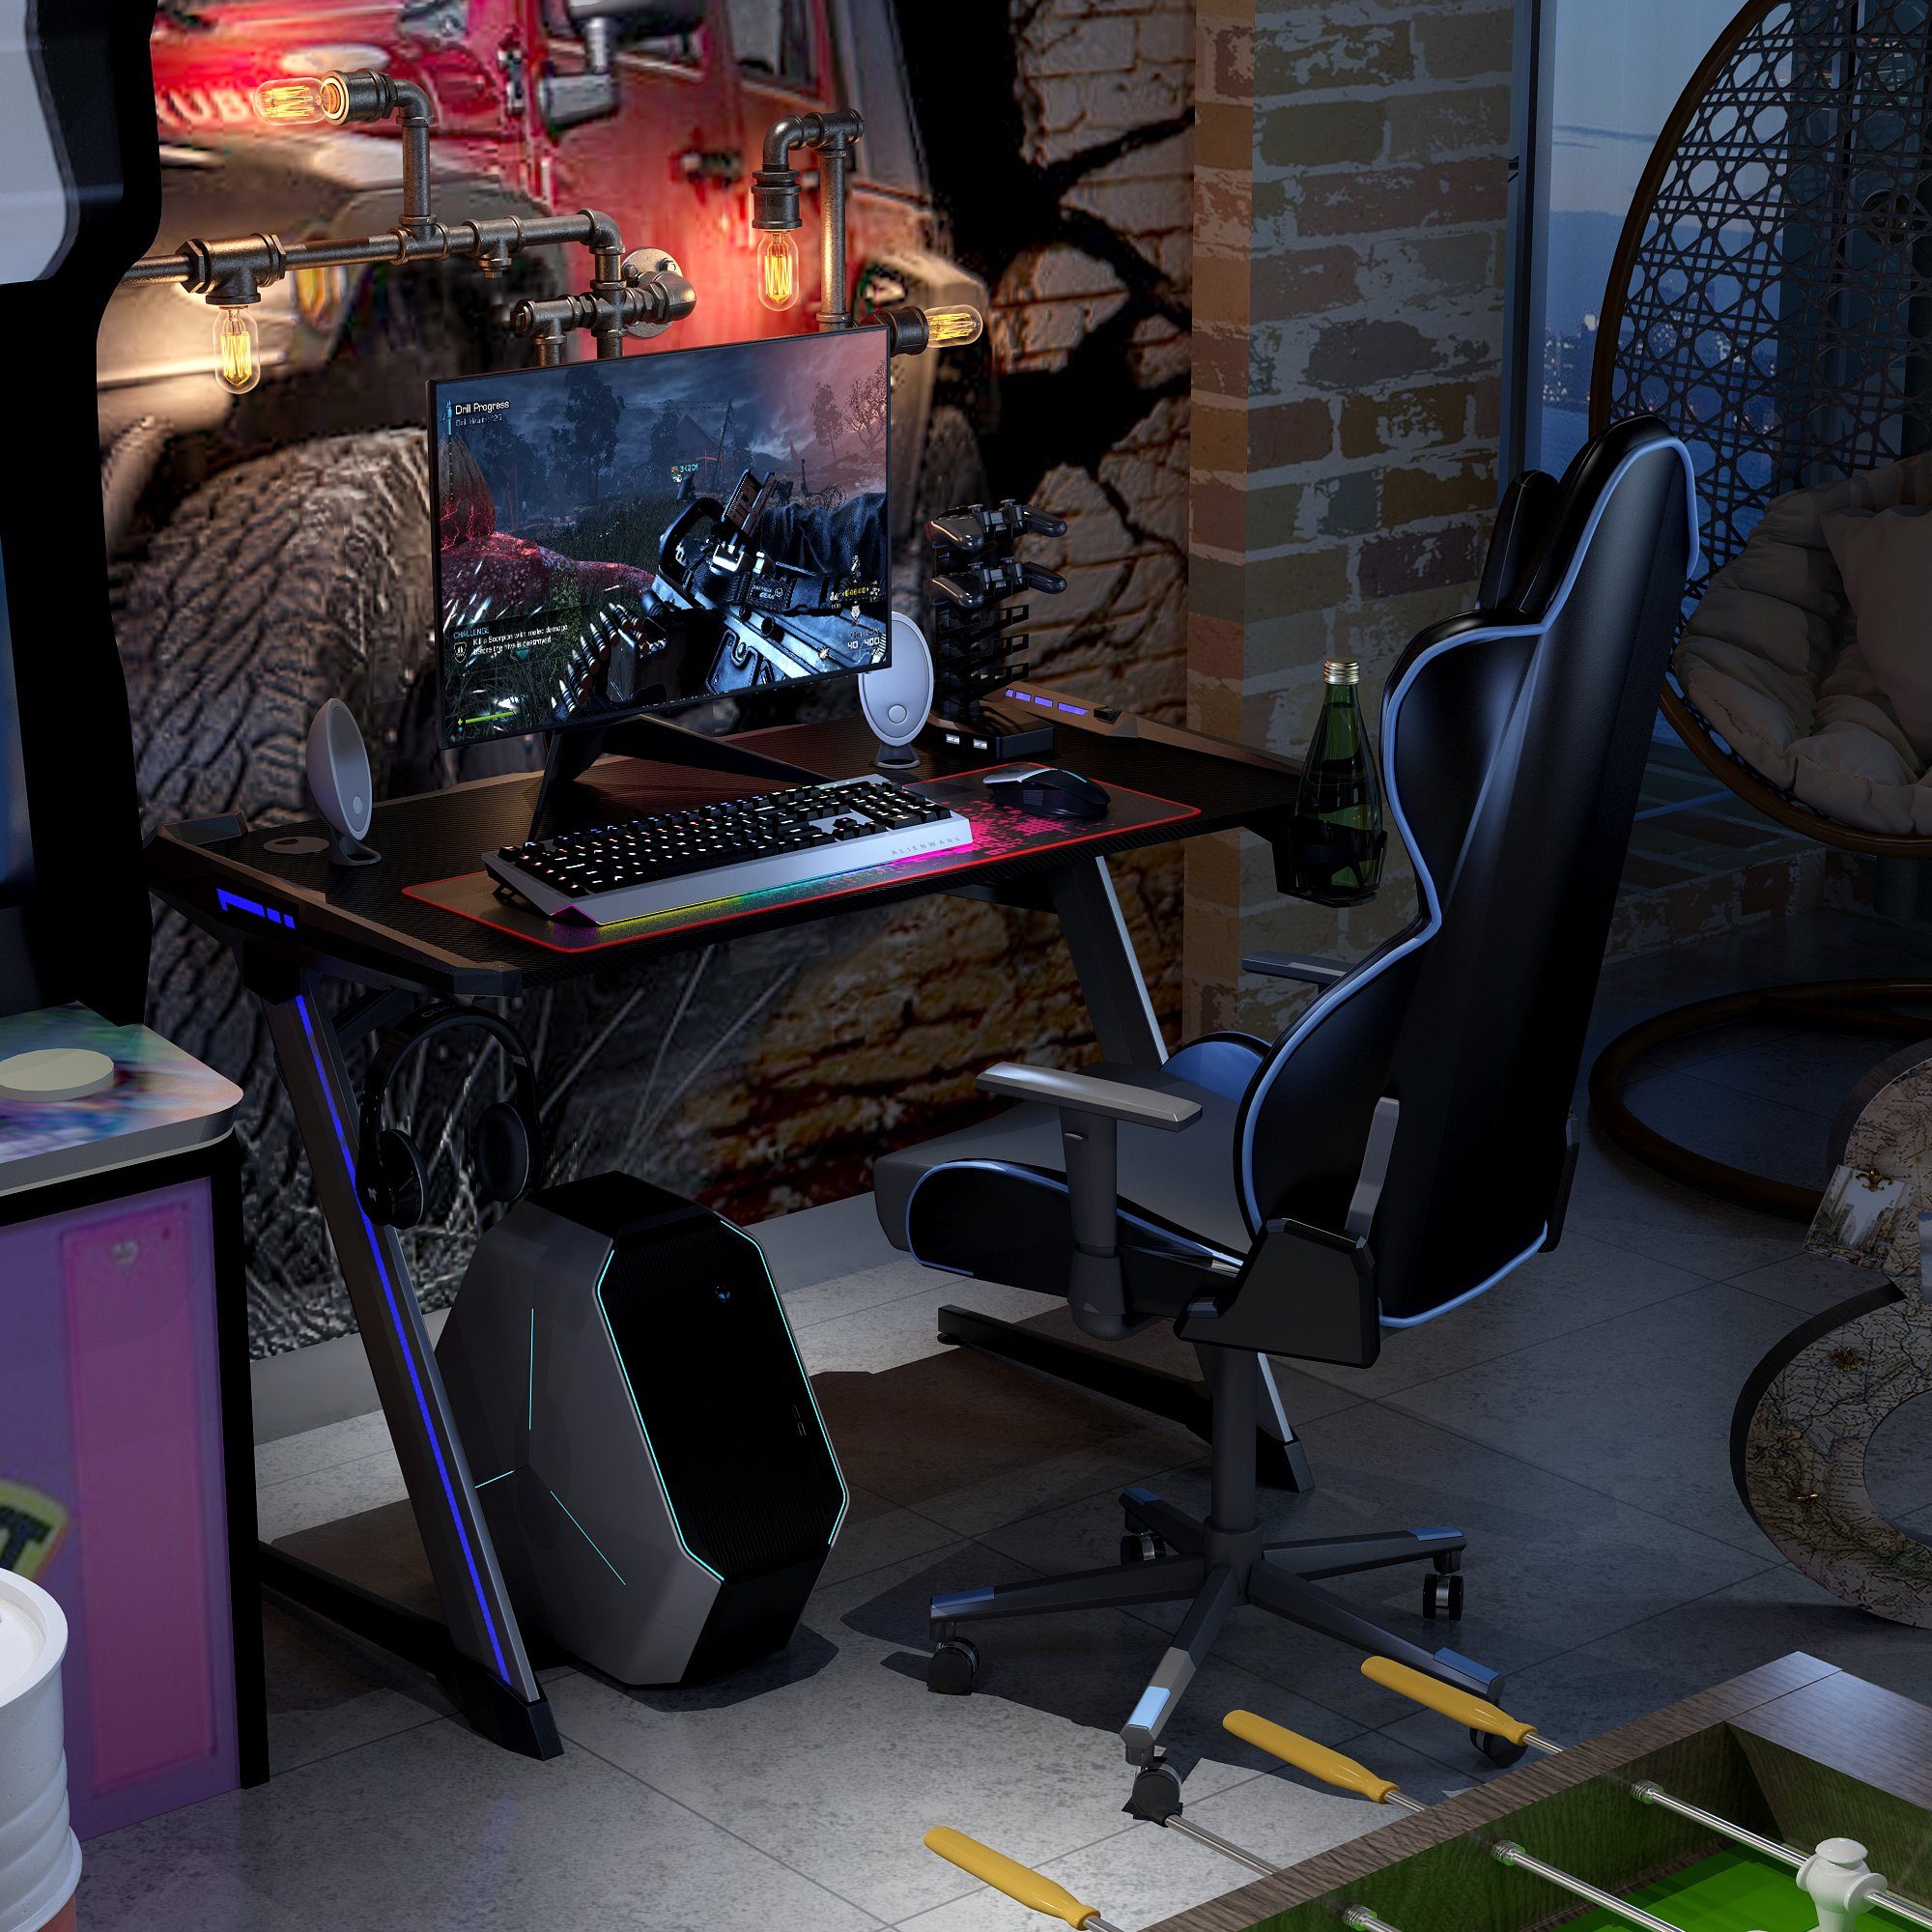 Gamingtisch, 4 mit RGB-Led, Z-förmig Controller-Halterung 120cm USB, COSTWAY